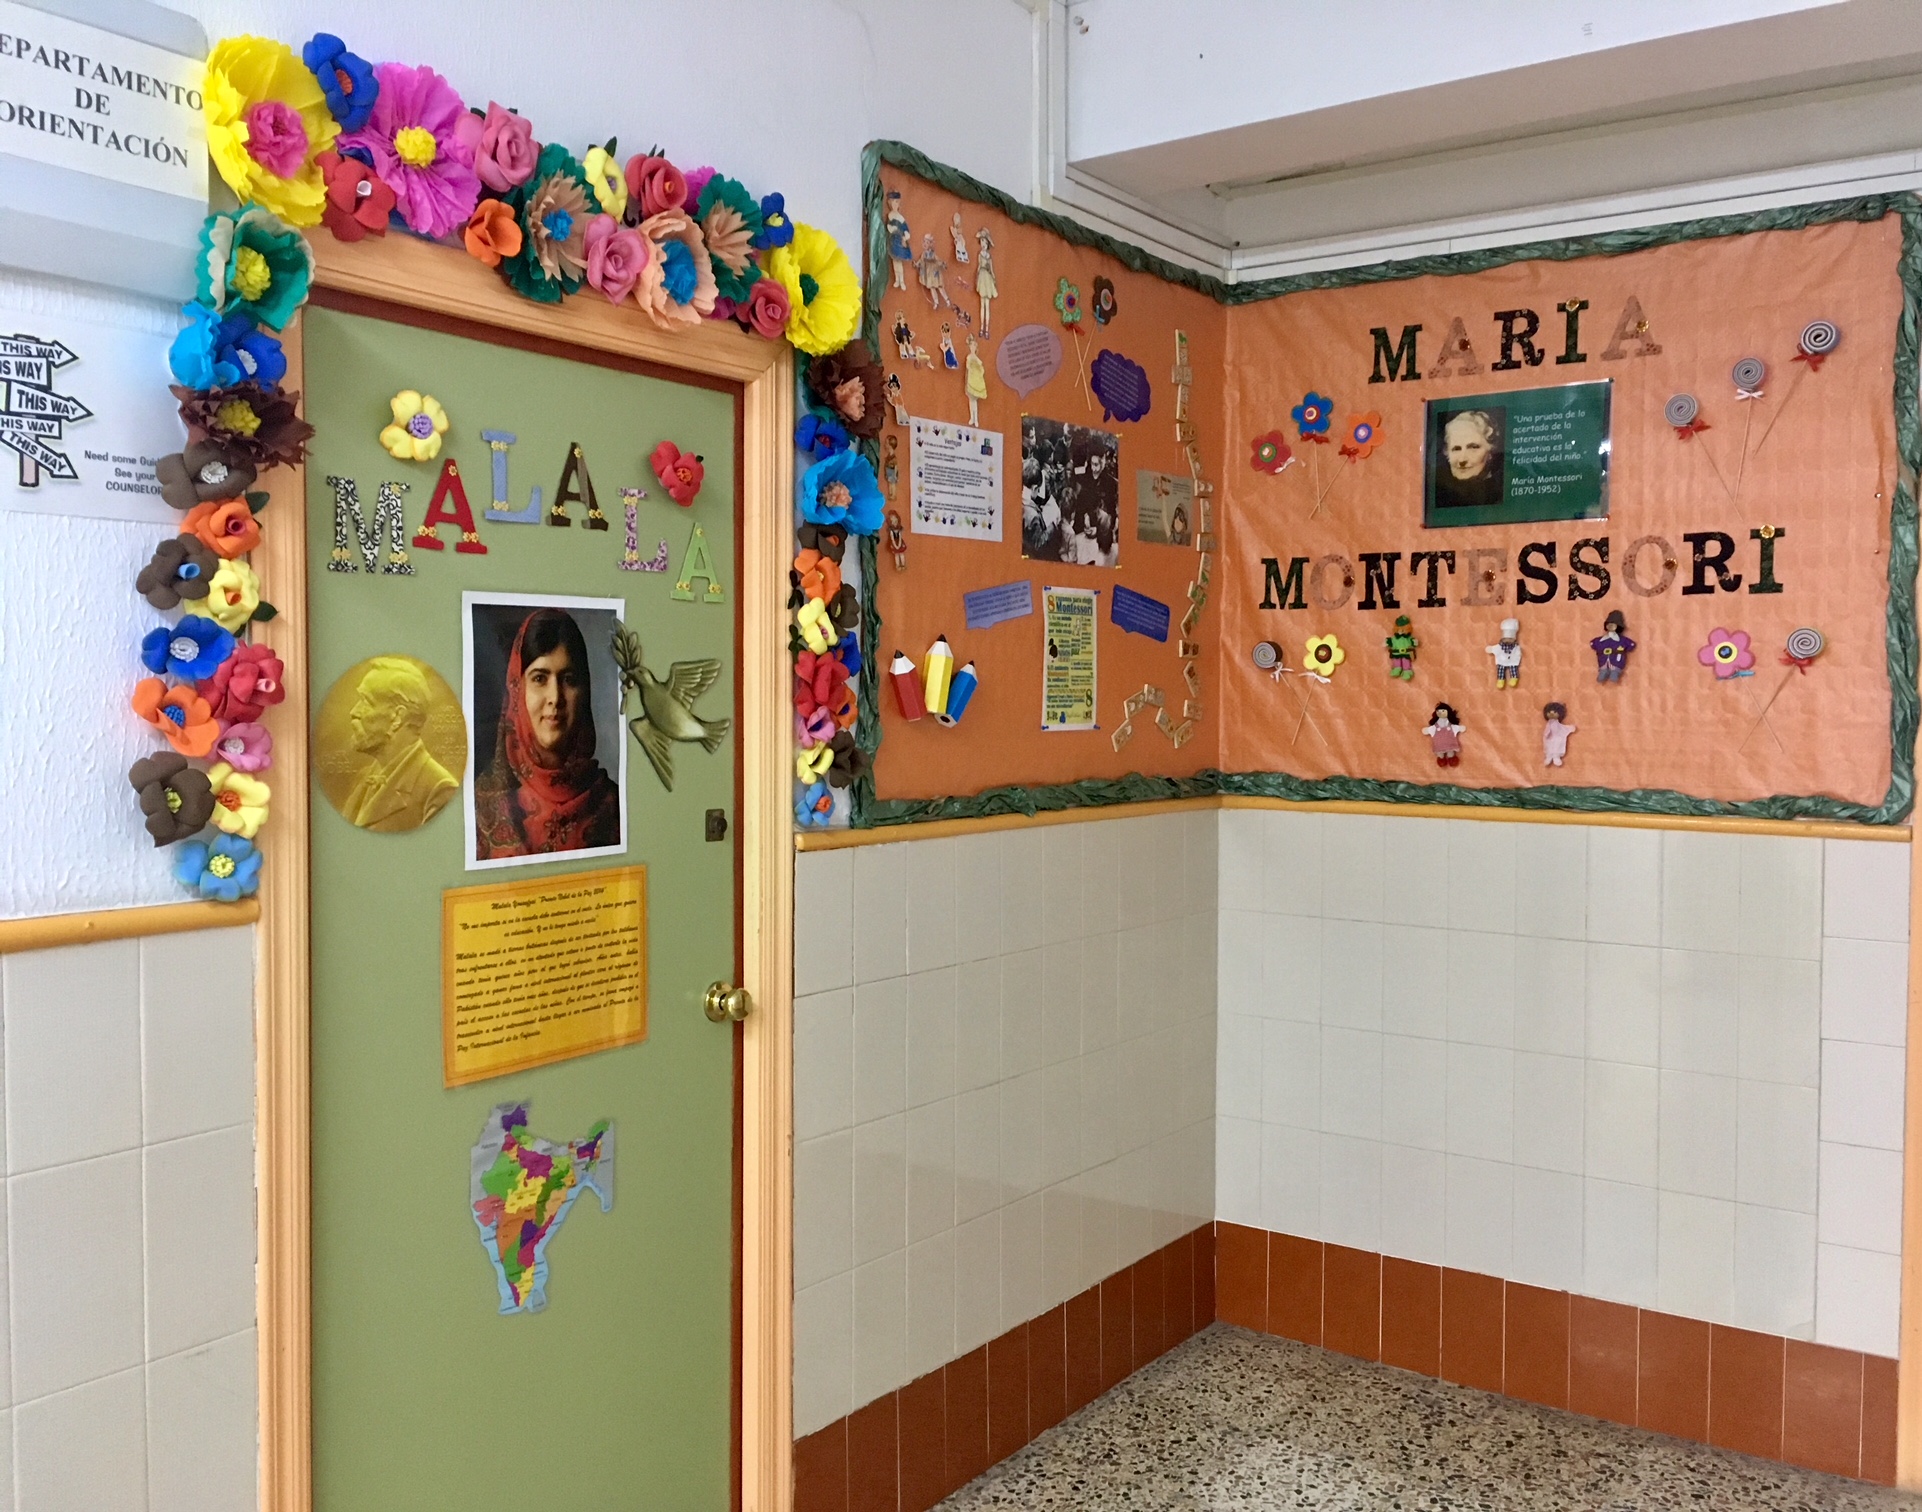 Malala y Montessori